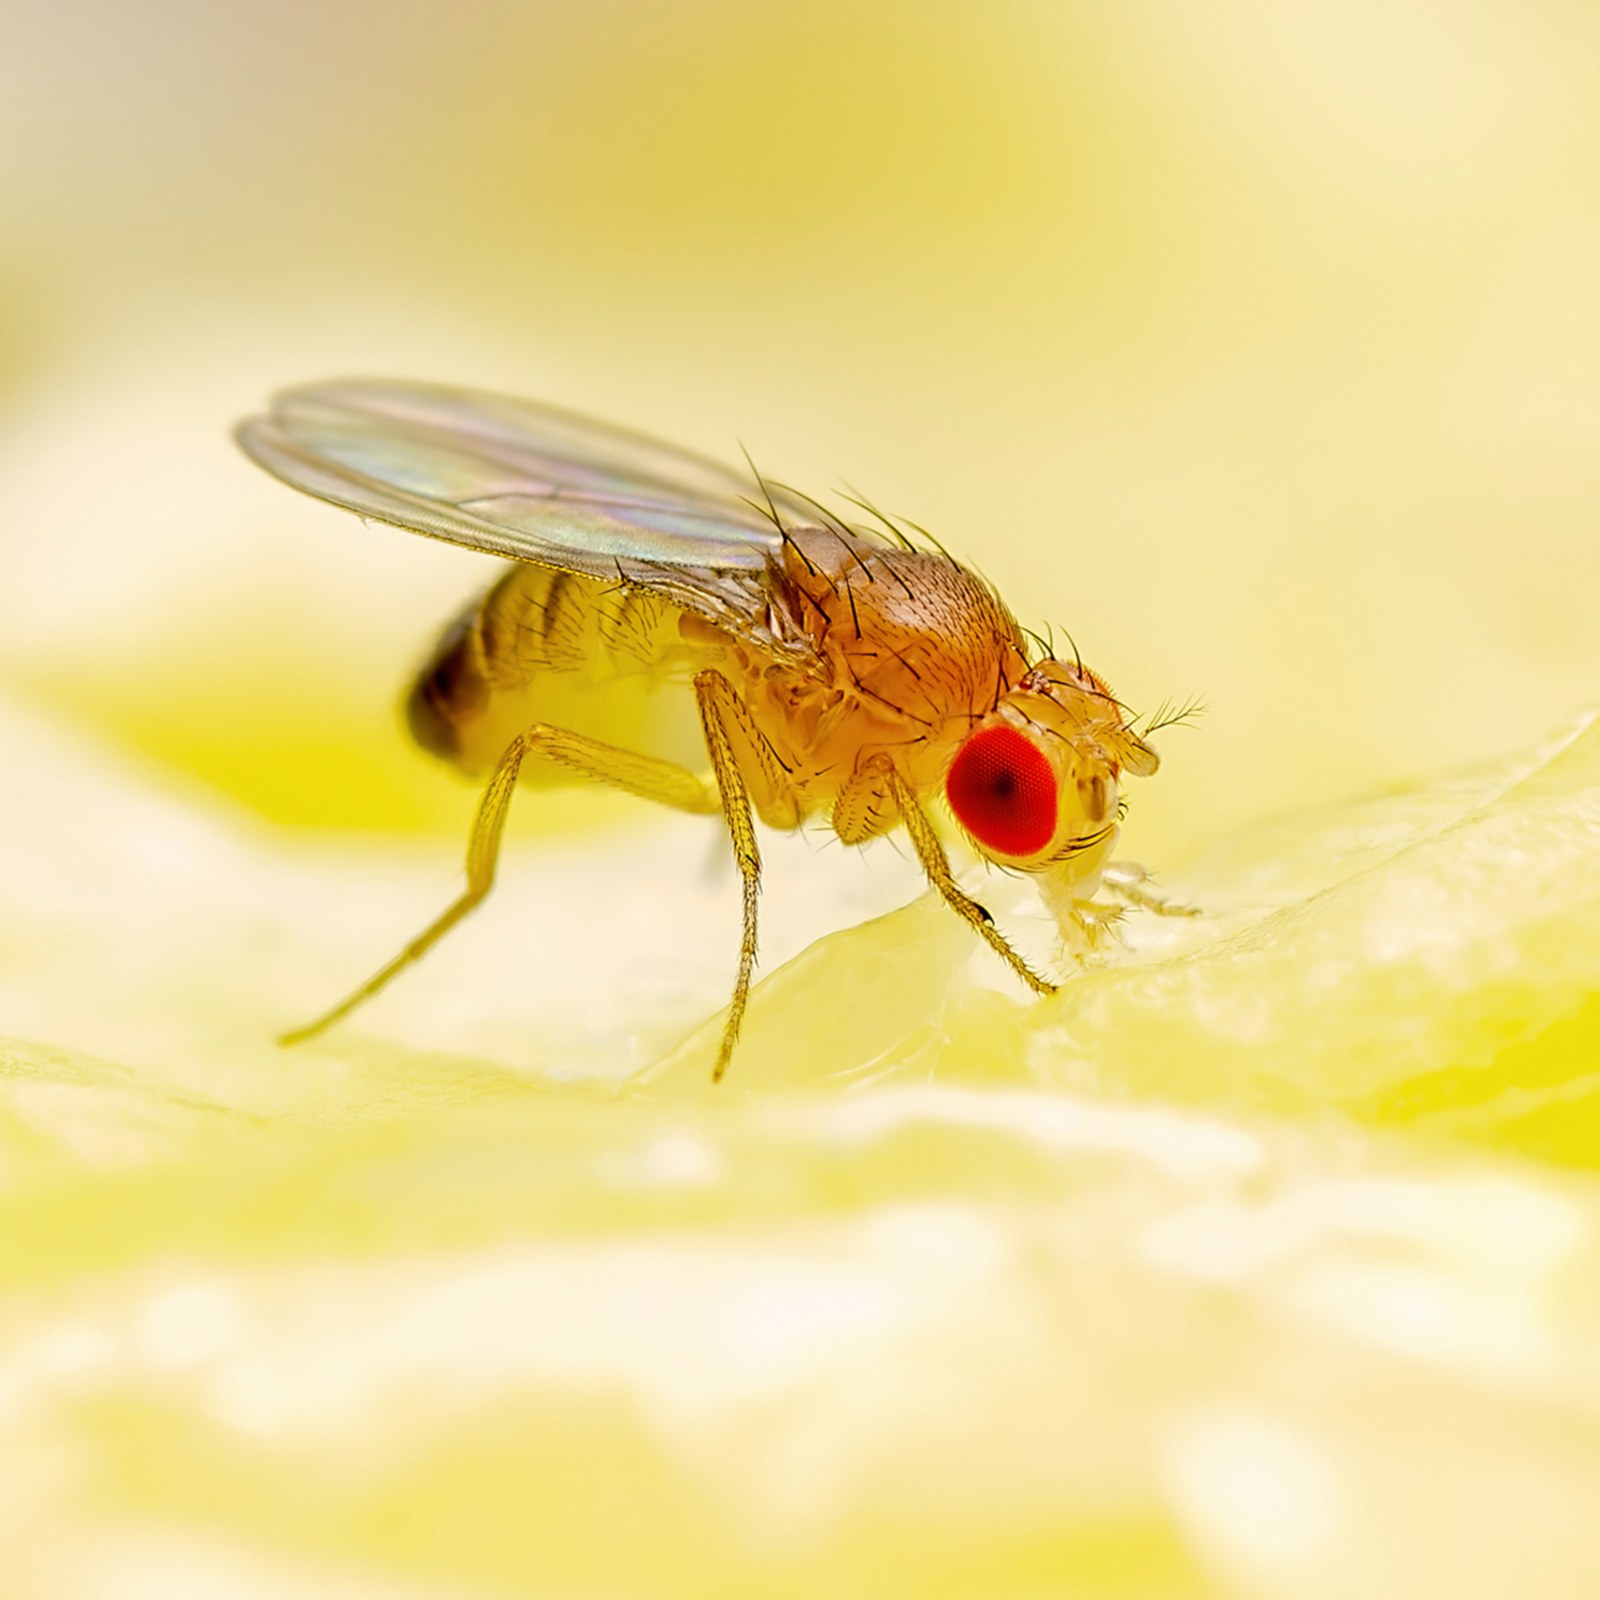 https://d.newsweek.com/en/full/2027434/simple-diy-hacks-kill-fruit-flies.jpg?w=1600&h=1600&q=88&f=5f11077159c52f4932a5e3a4de308c92